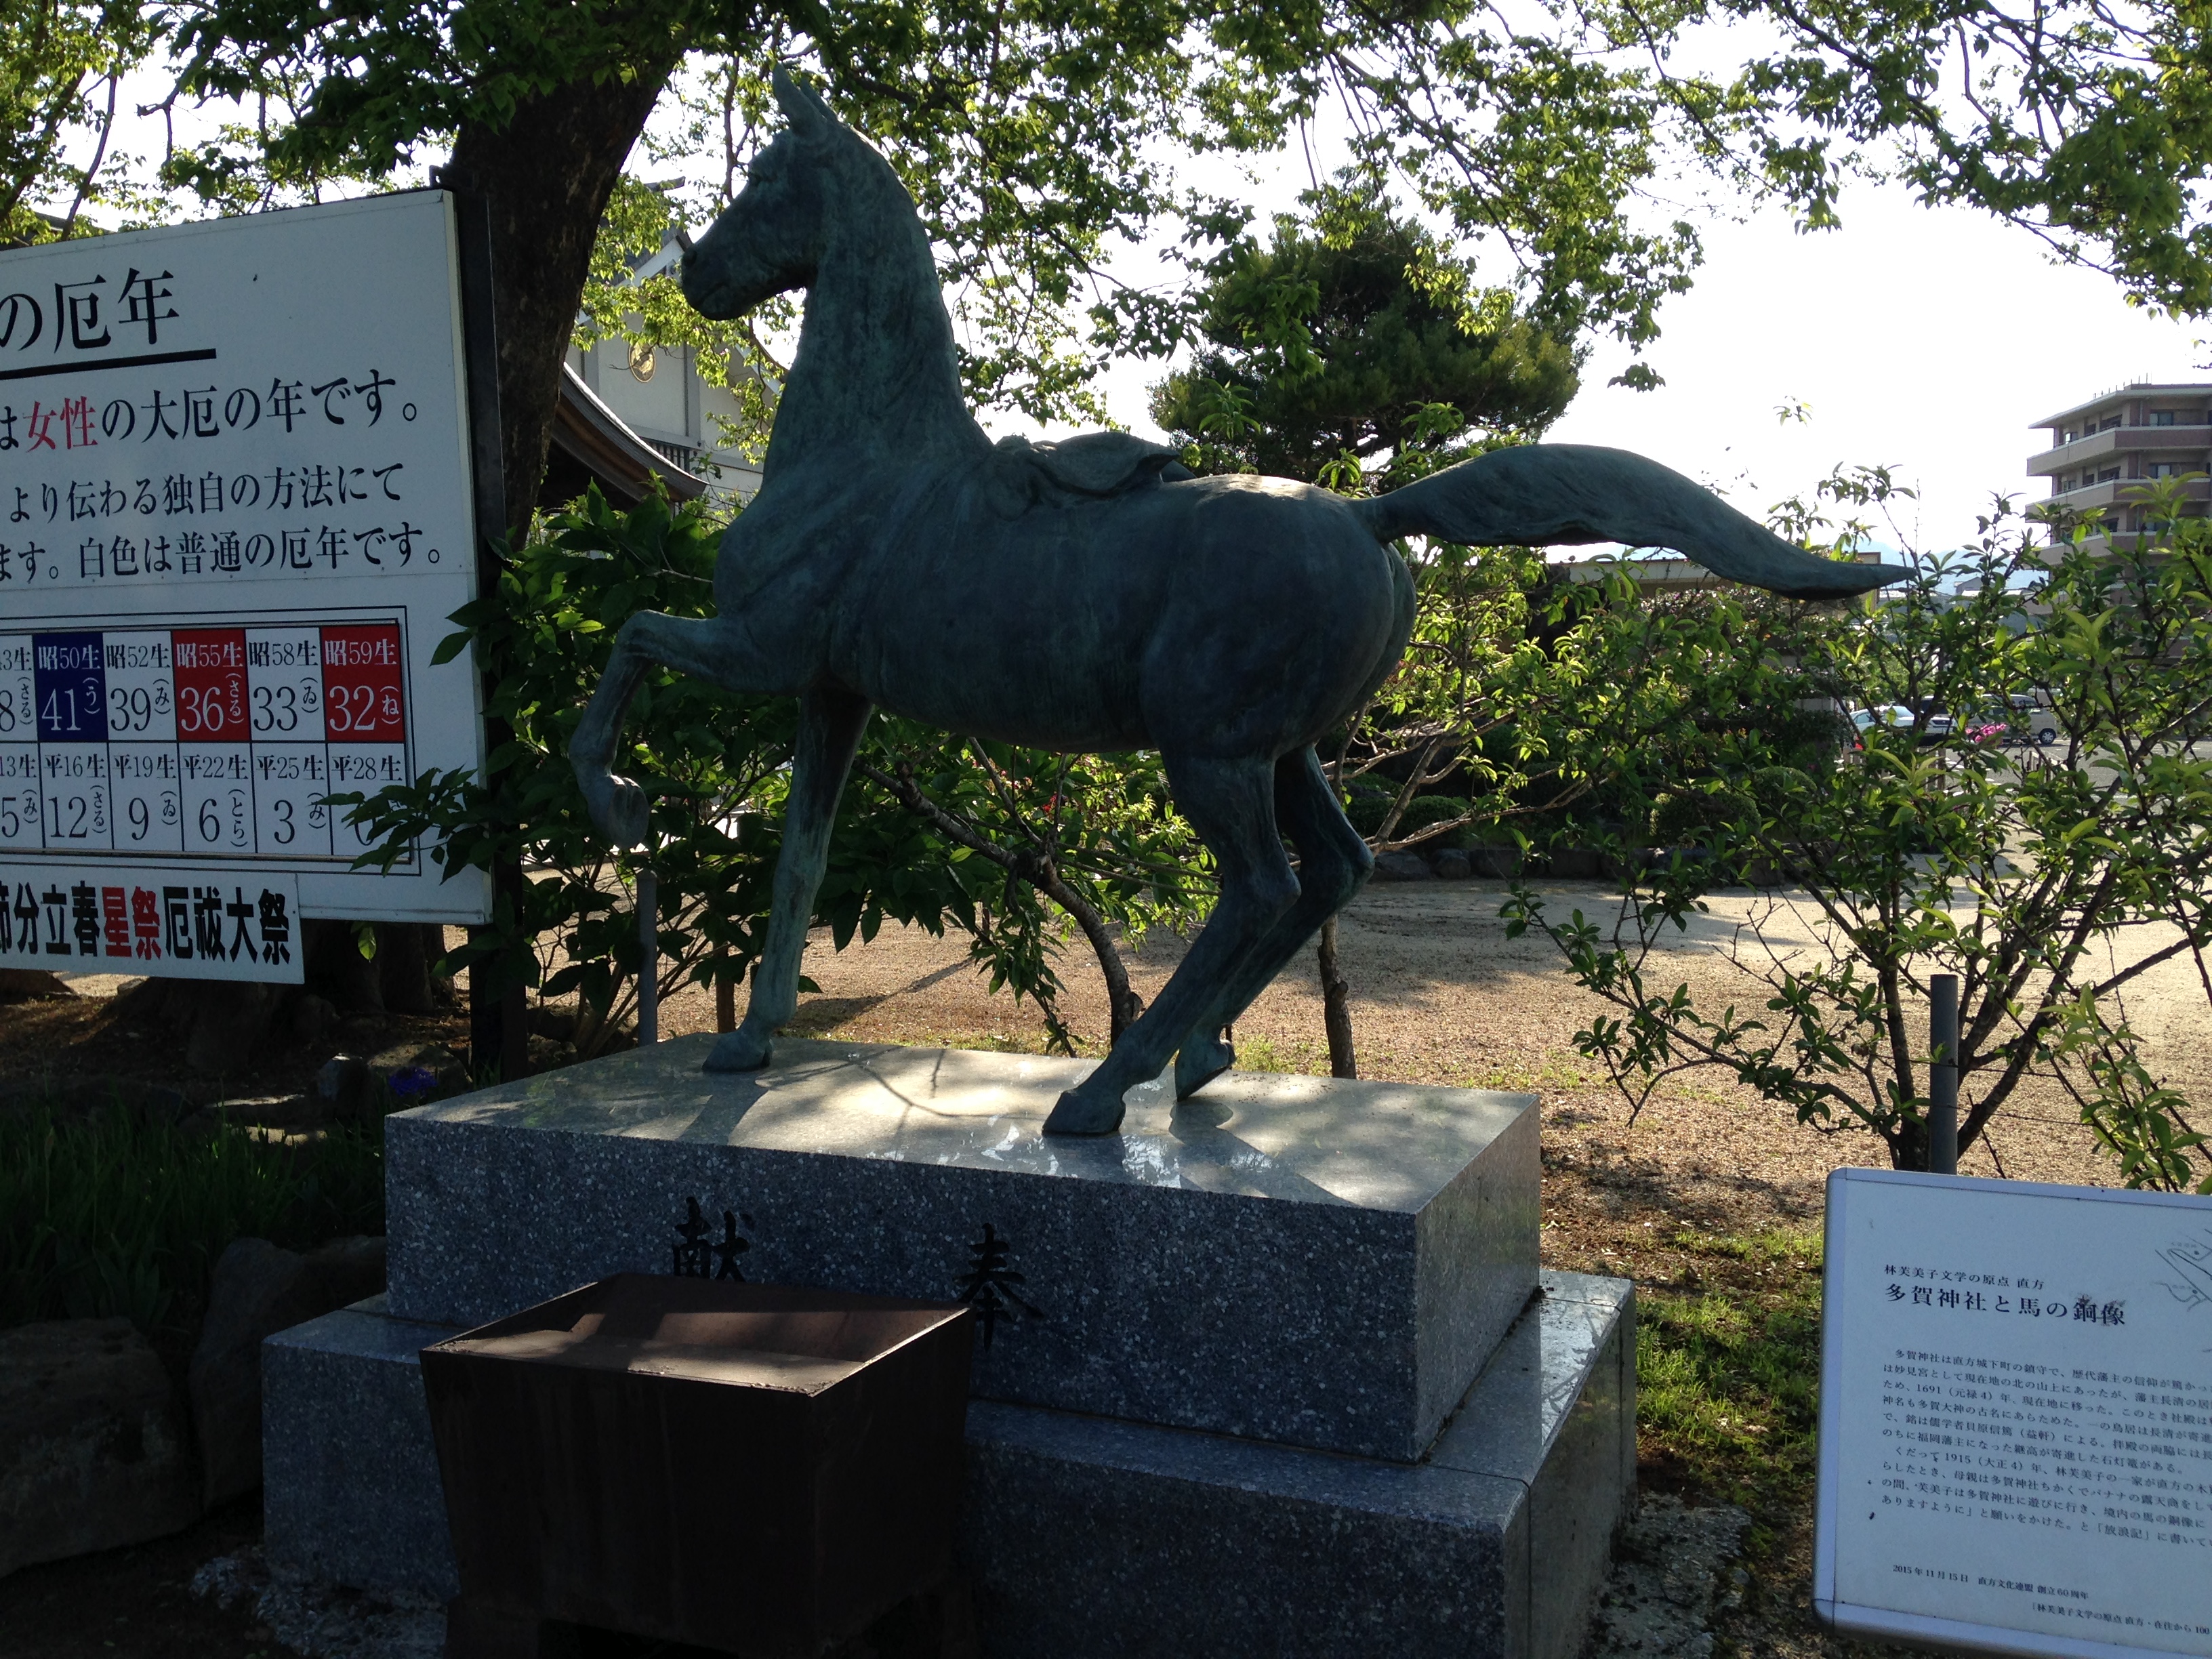 File Sacred Horse In a Shrine In Nogata Fukuoka Jpg Wikimedia Commons